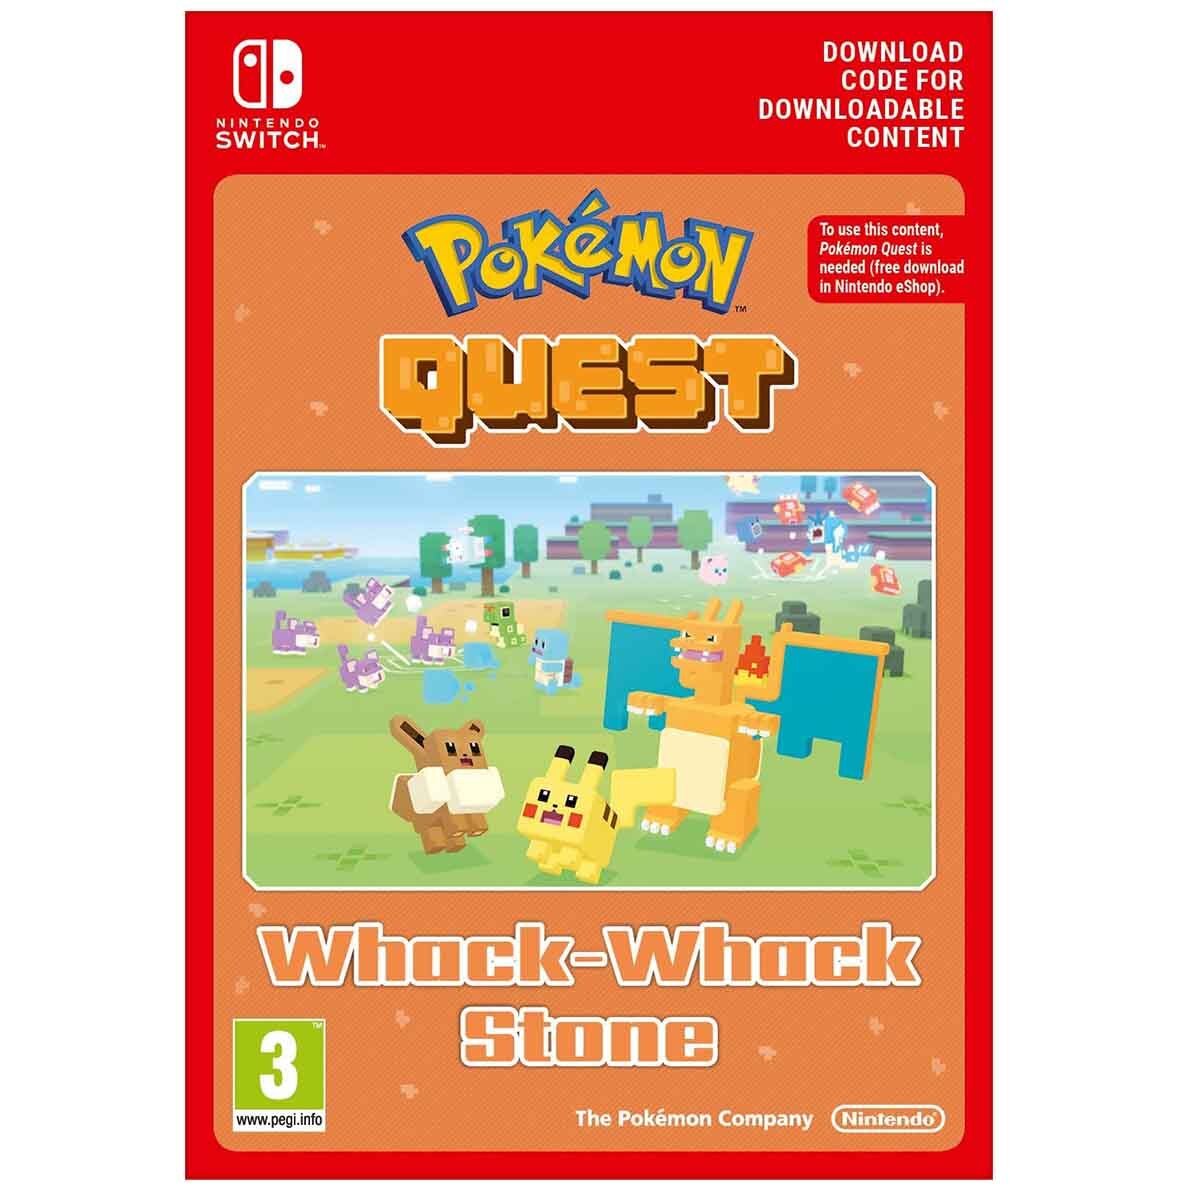 Image of Pokemon QUEST Whack-Whack Stone